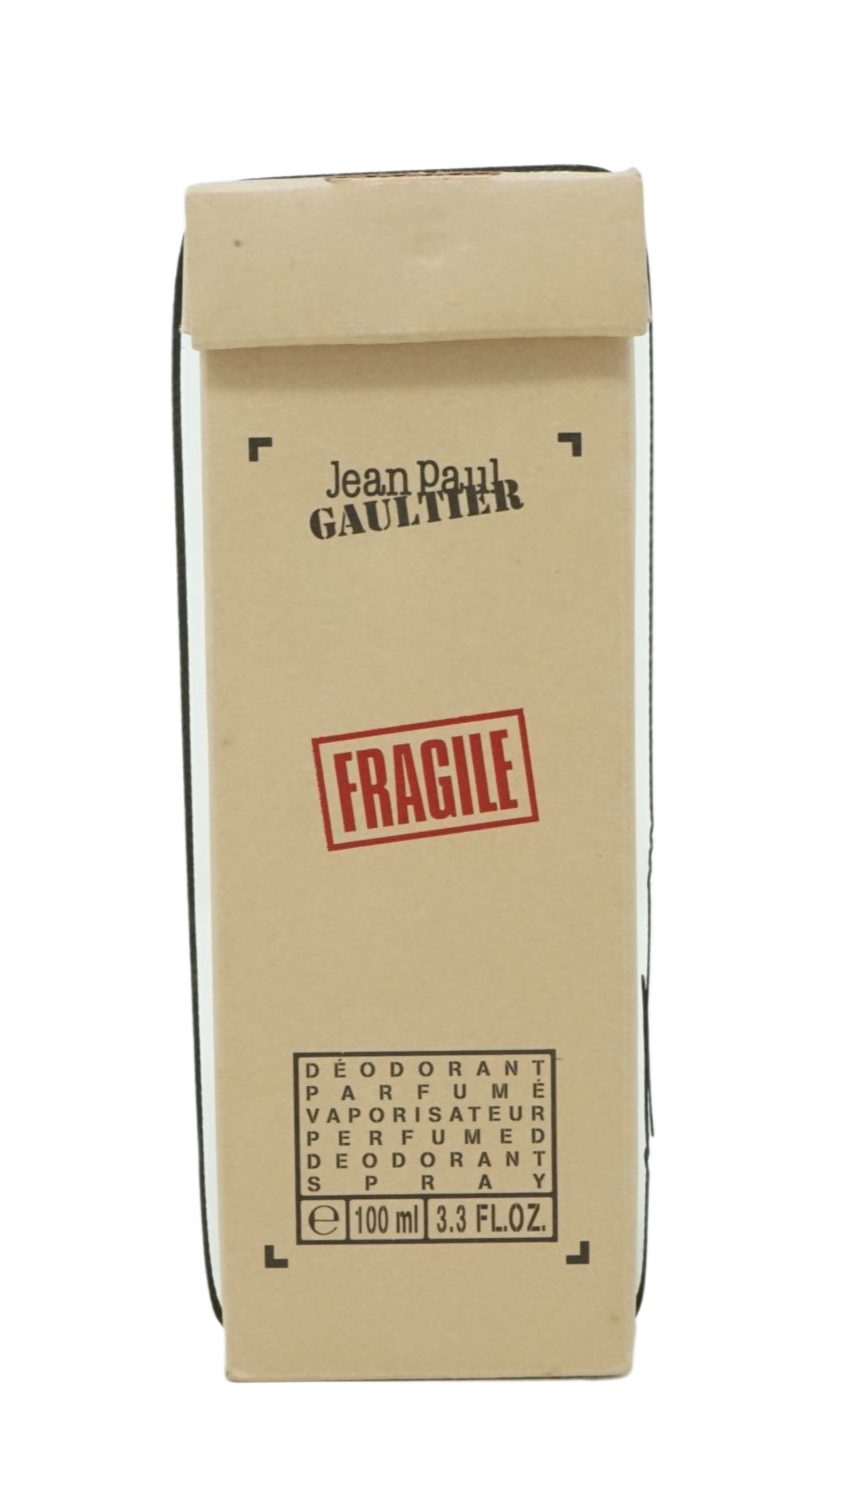 100ml Fragile Jean JEAN GAULTIER PAUL Paul Gaultier Deo-Spray Spray Deodorant